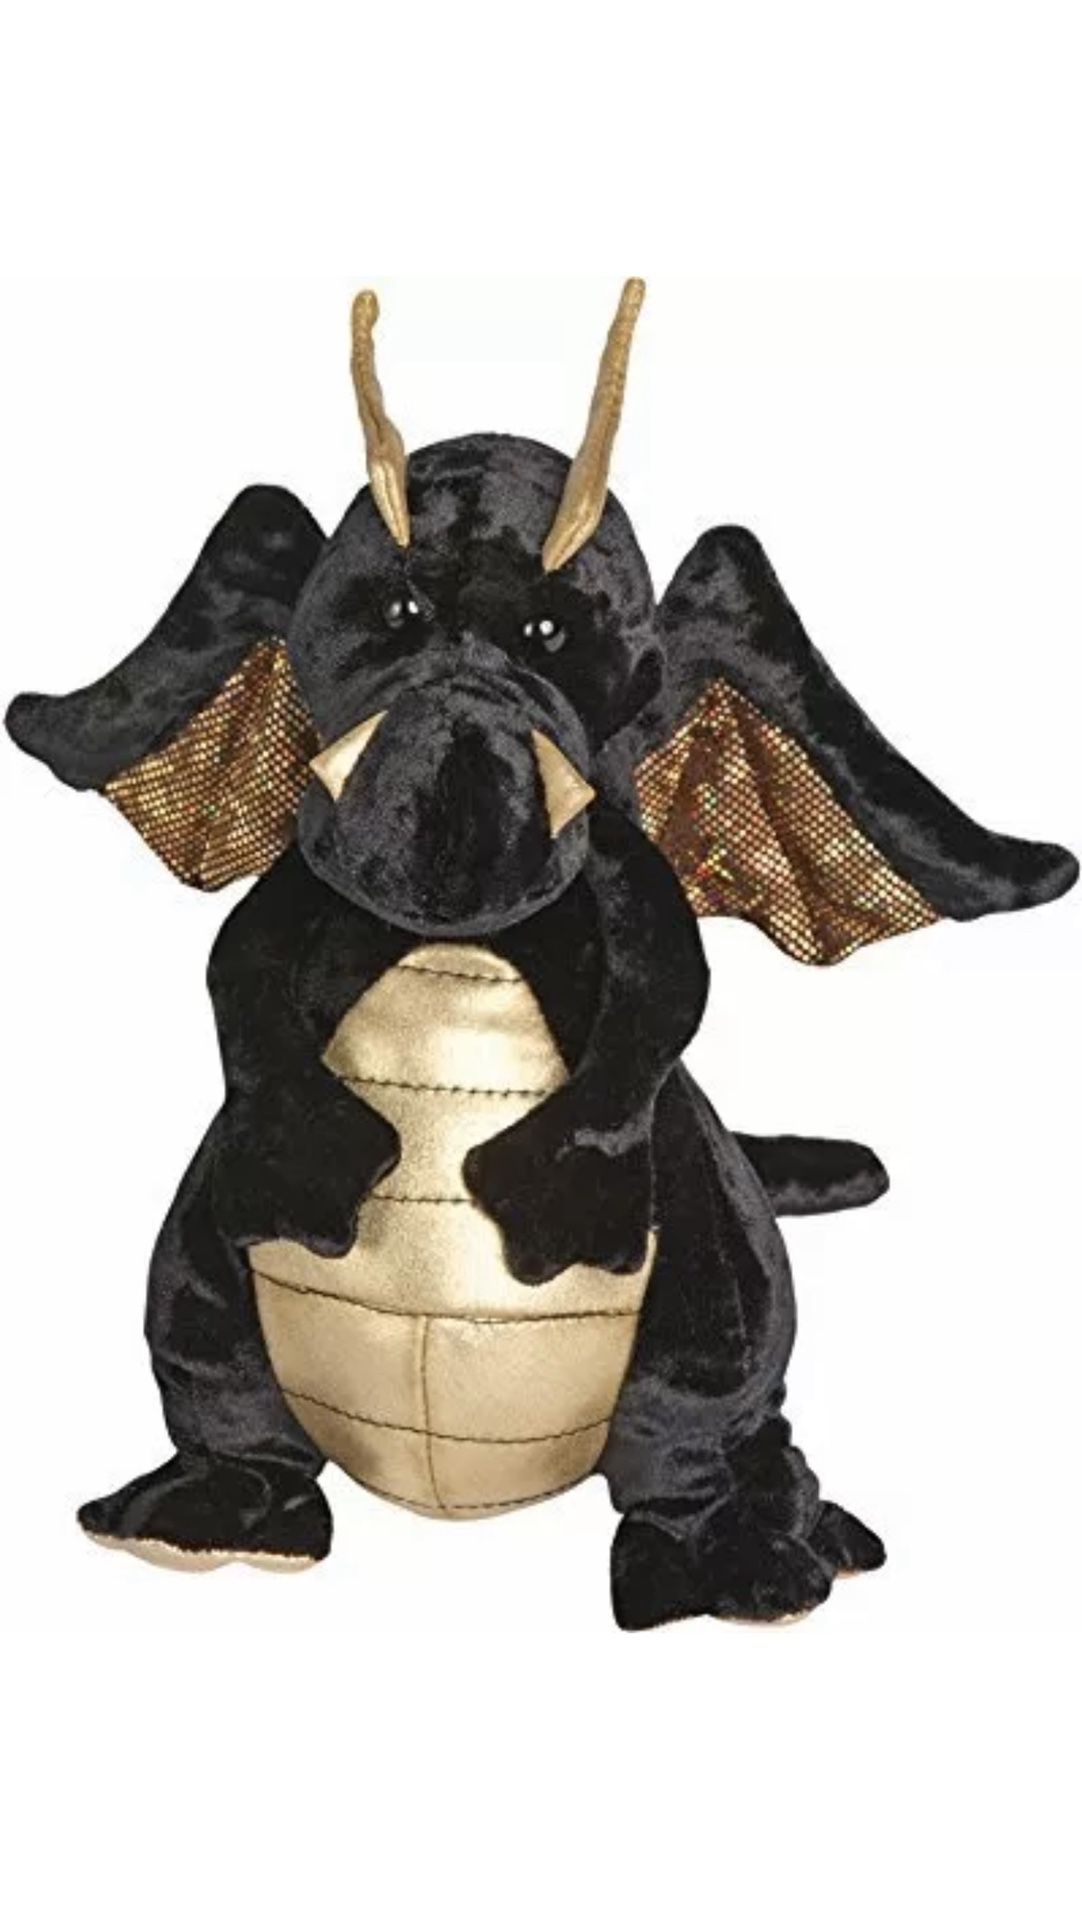 Merlin Dragon 9" by Douglas Cuddle Toys Stuffed Animal Black Plush Plushie doll